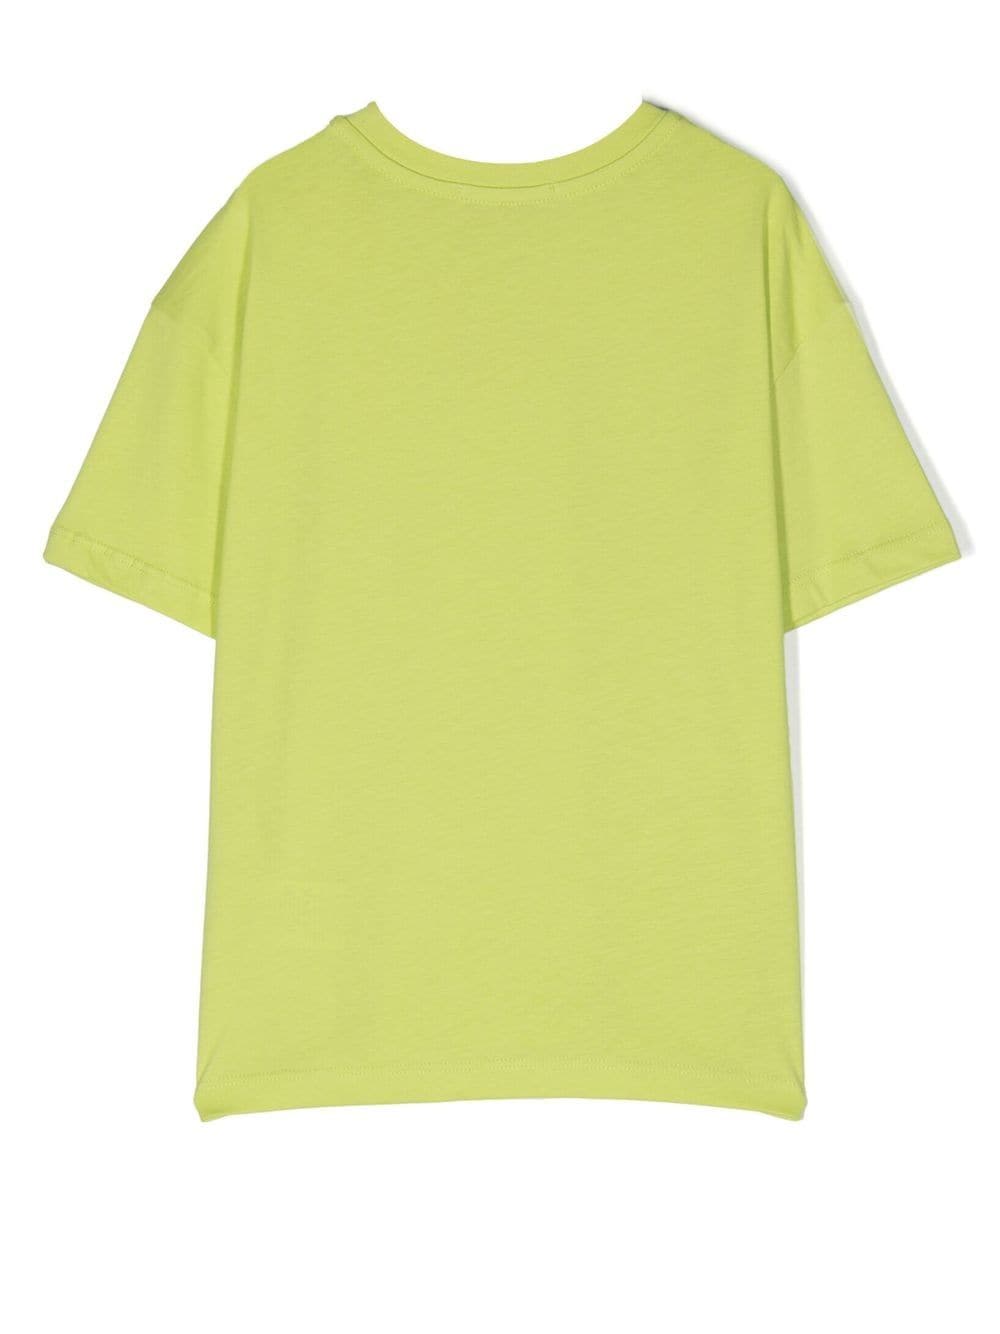 Green children's t-shirt with logo